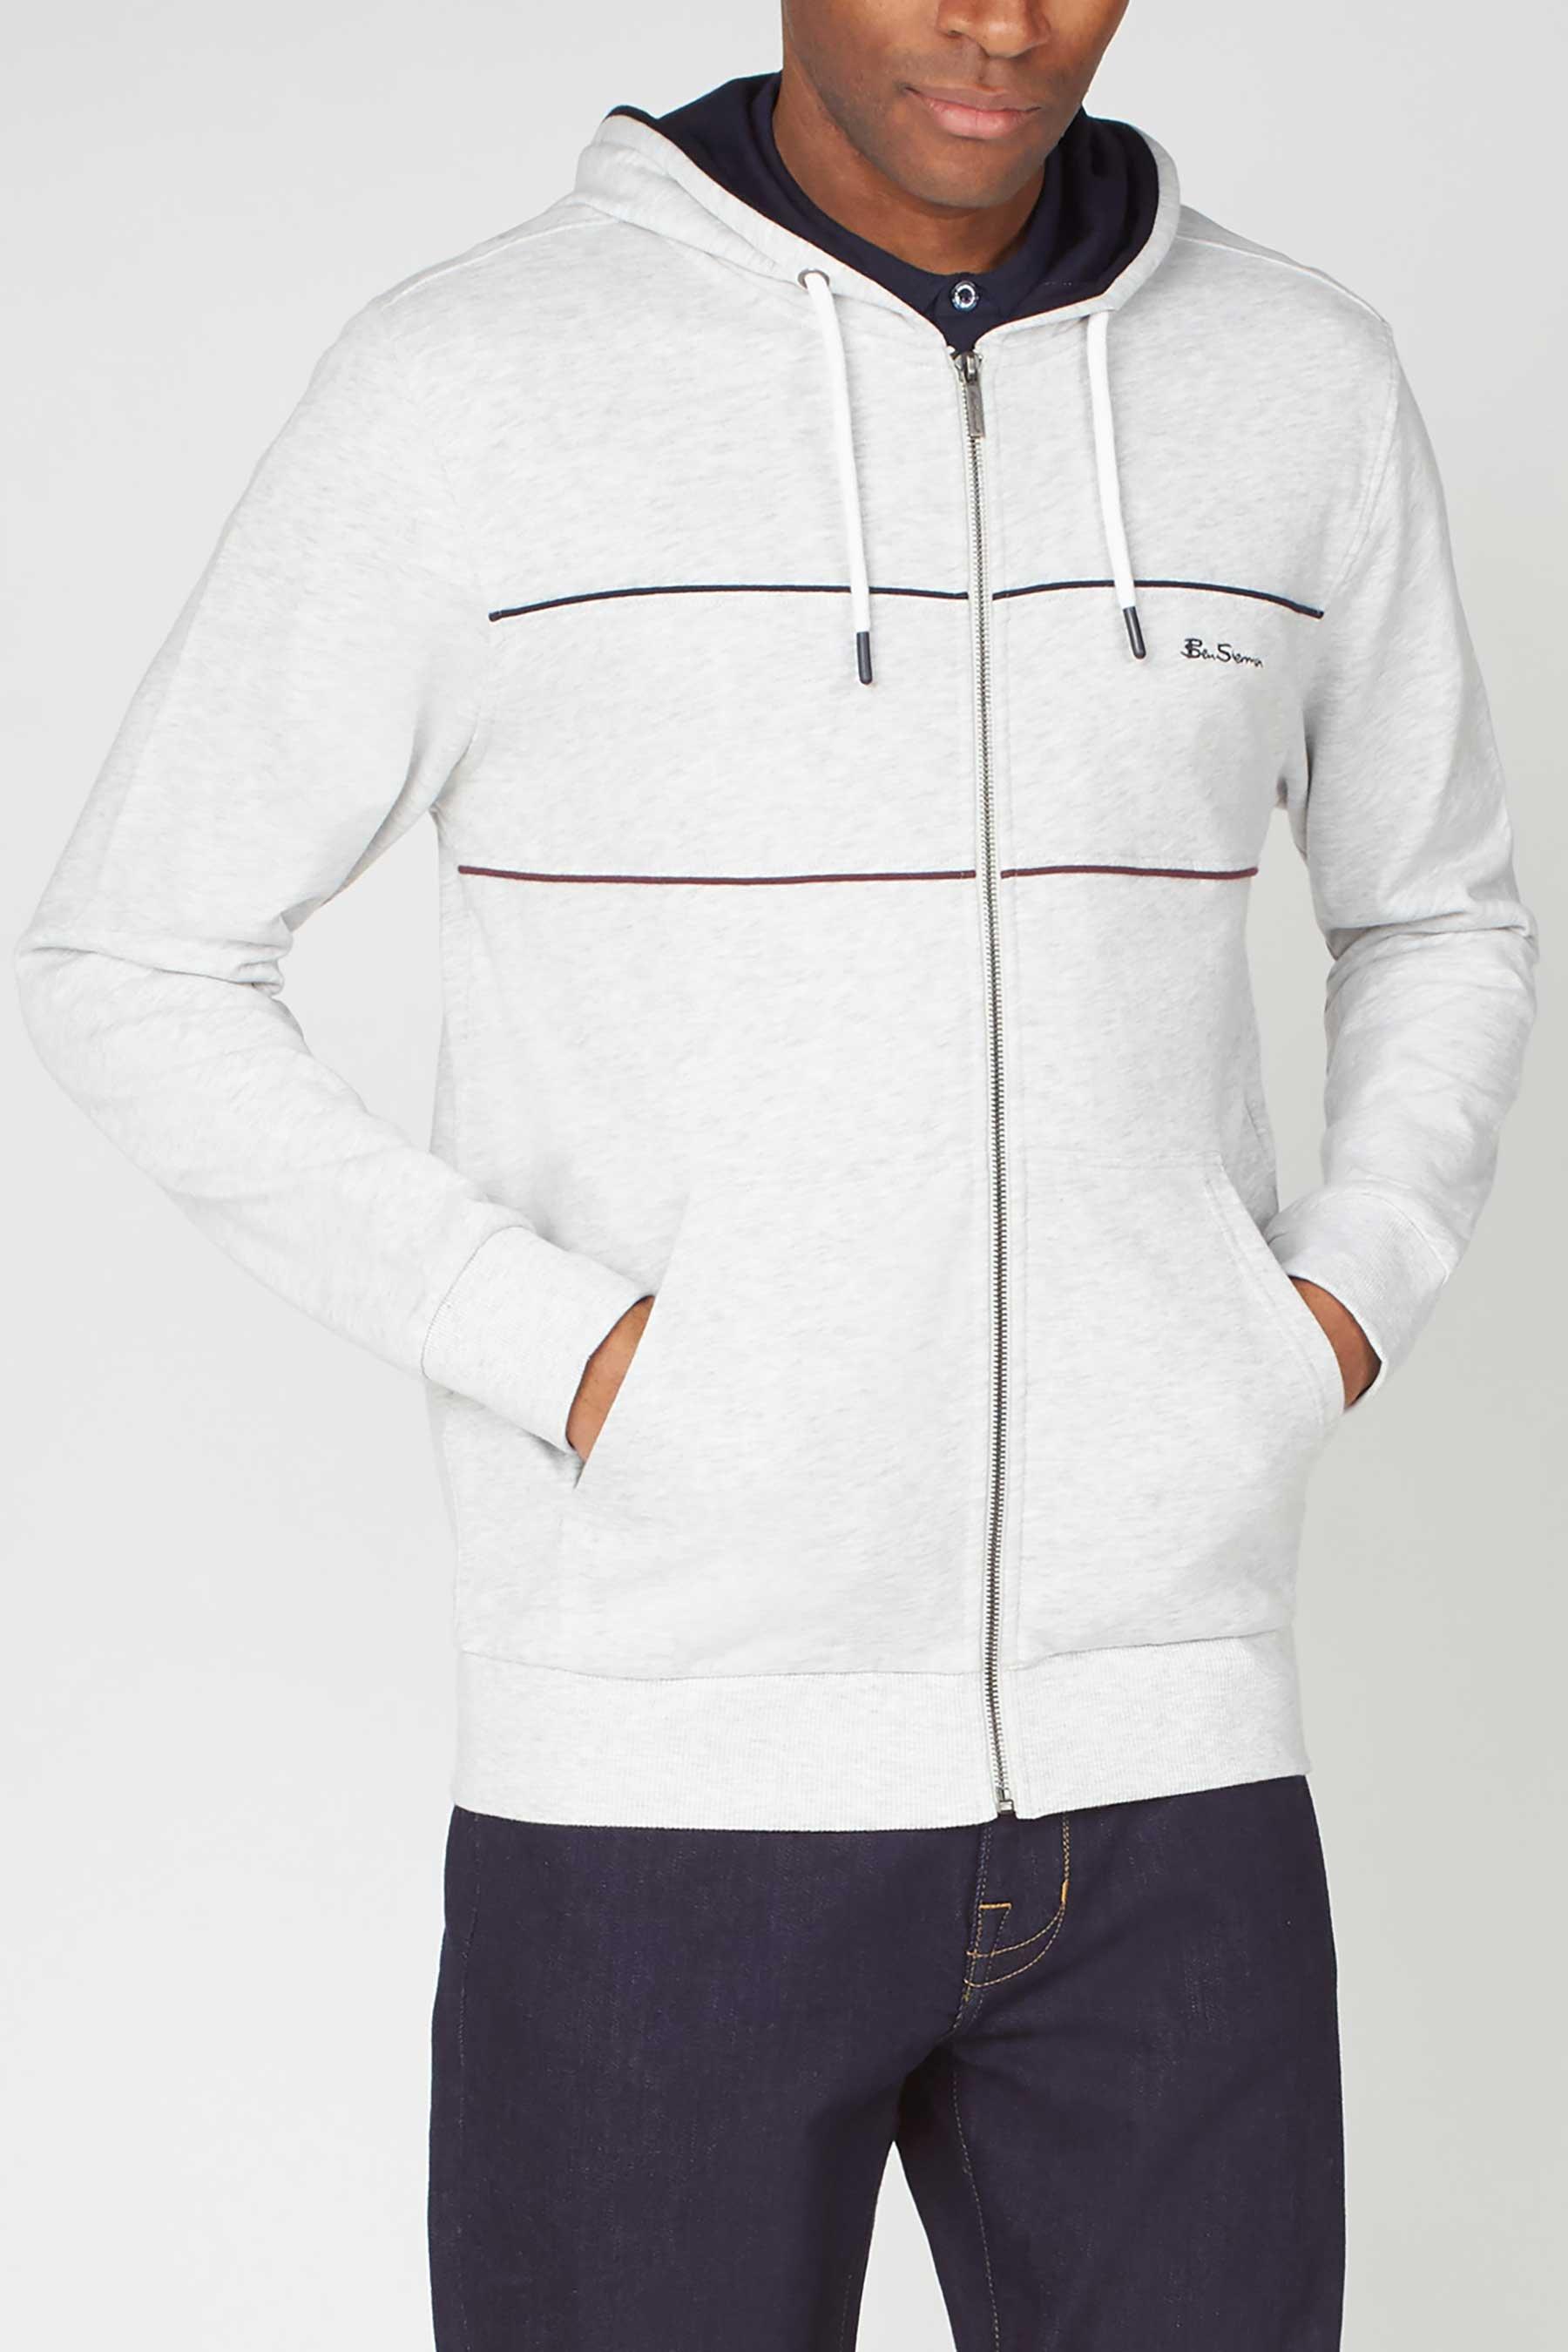 ben sherman stripe panel zip through grey marl hoodie - mens - size: small